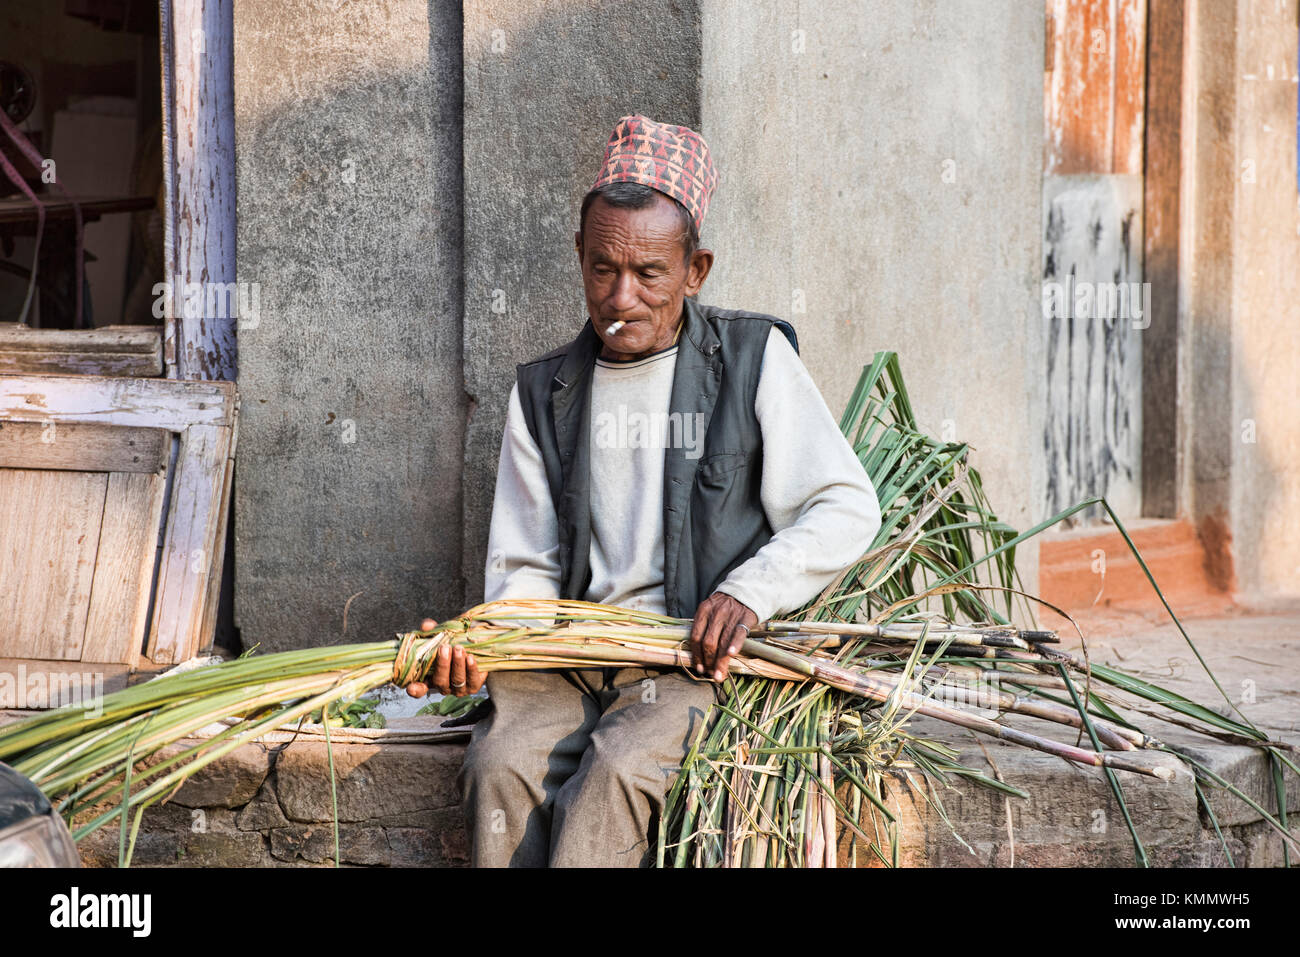 Sugar cane seller, Bhaktapur, Nepal Stock Photo